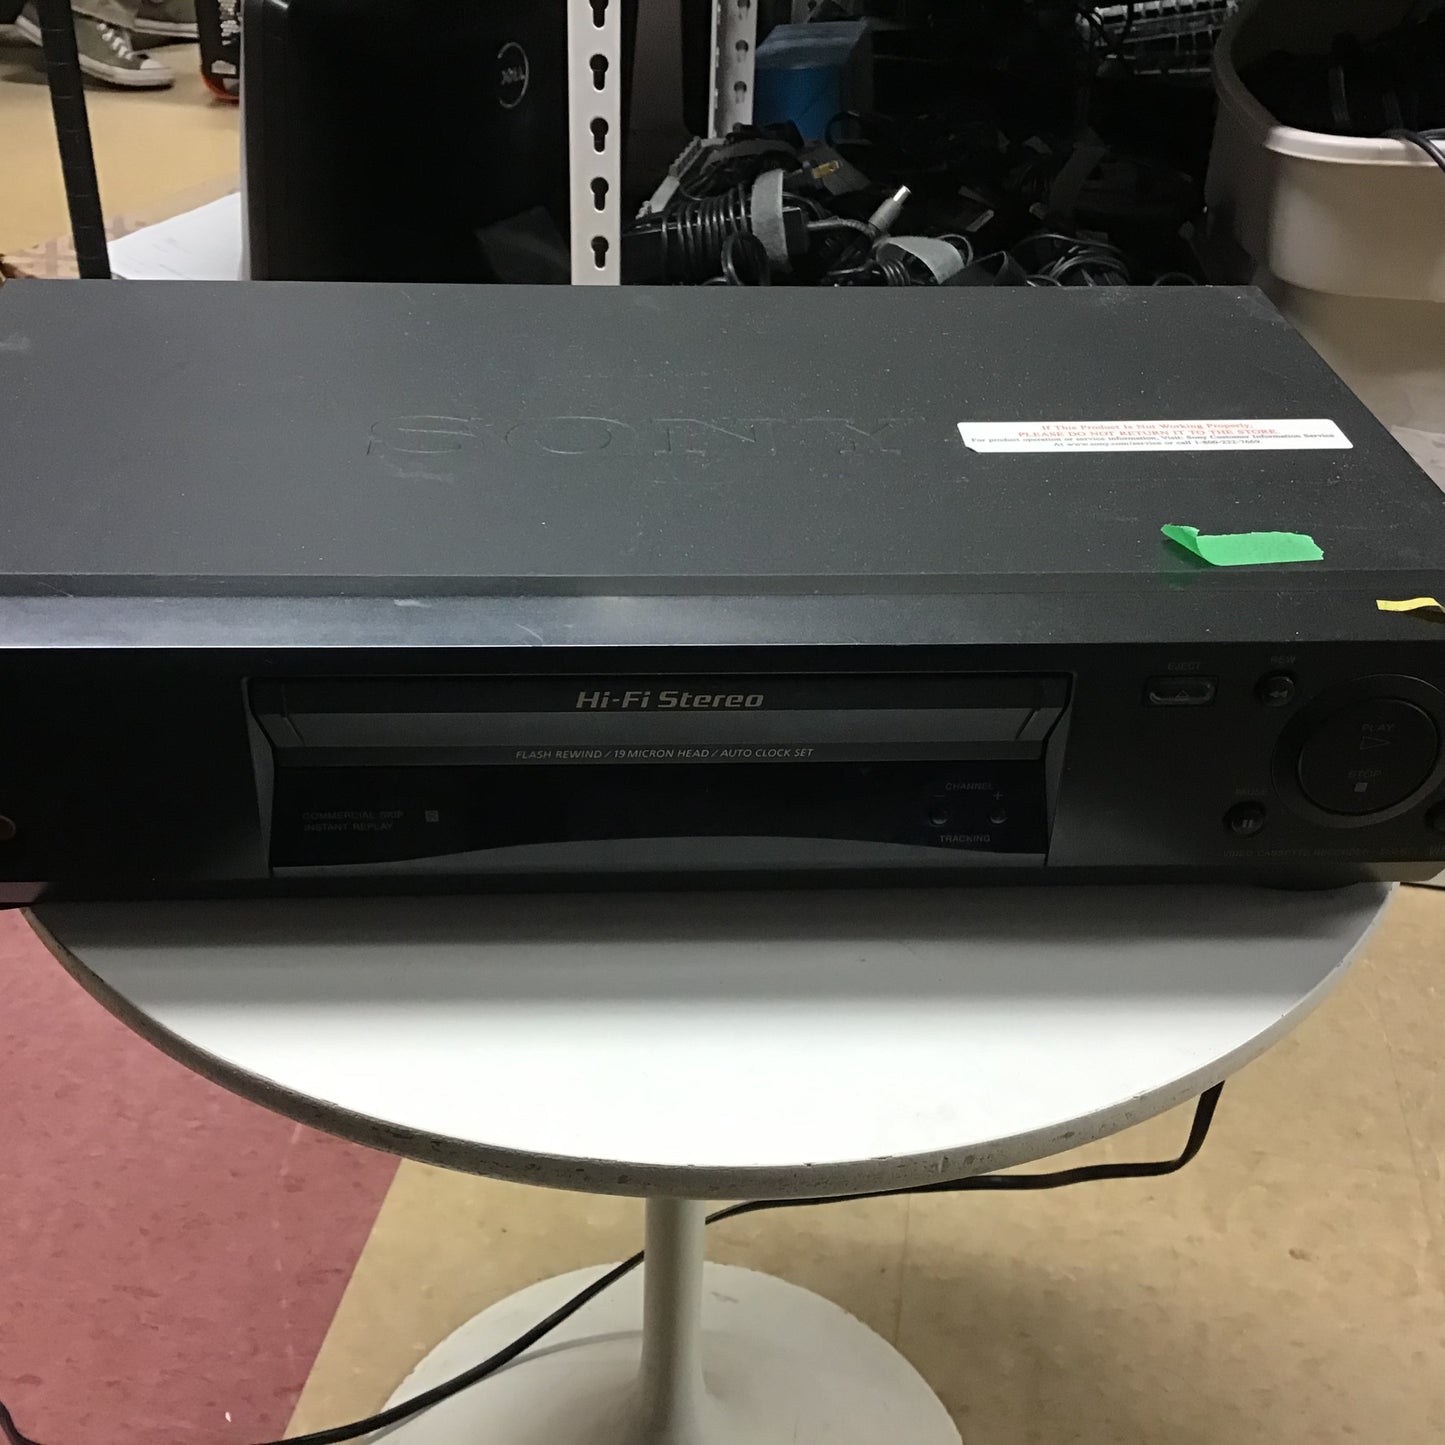 Sony SLV-N77 HiFi VCR